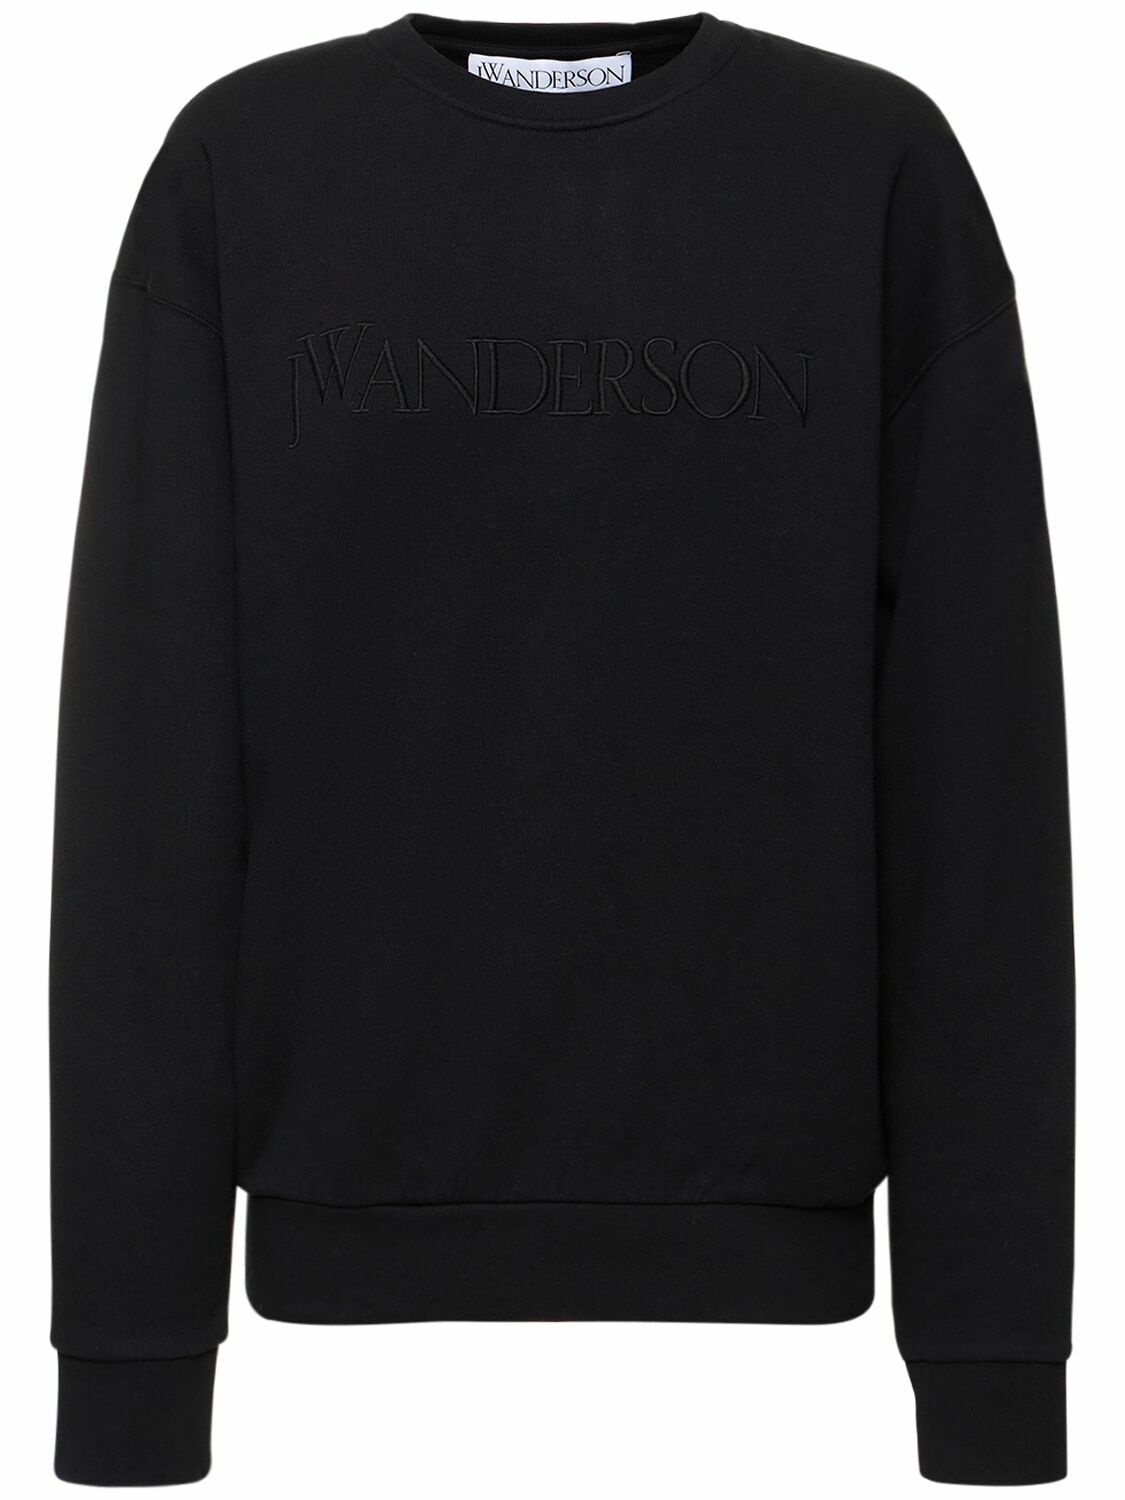 JW Anderson Navy Embroidered Sweatshirt